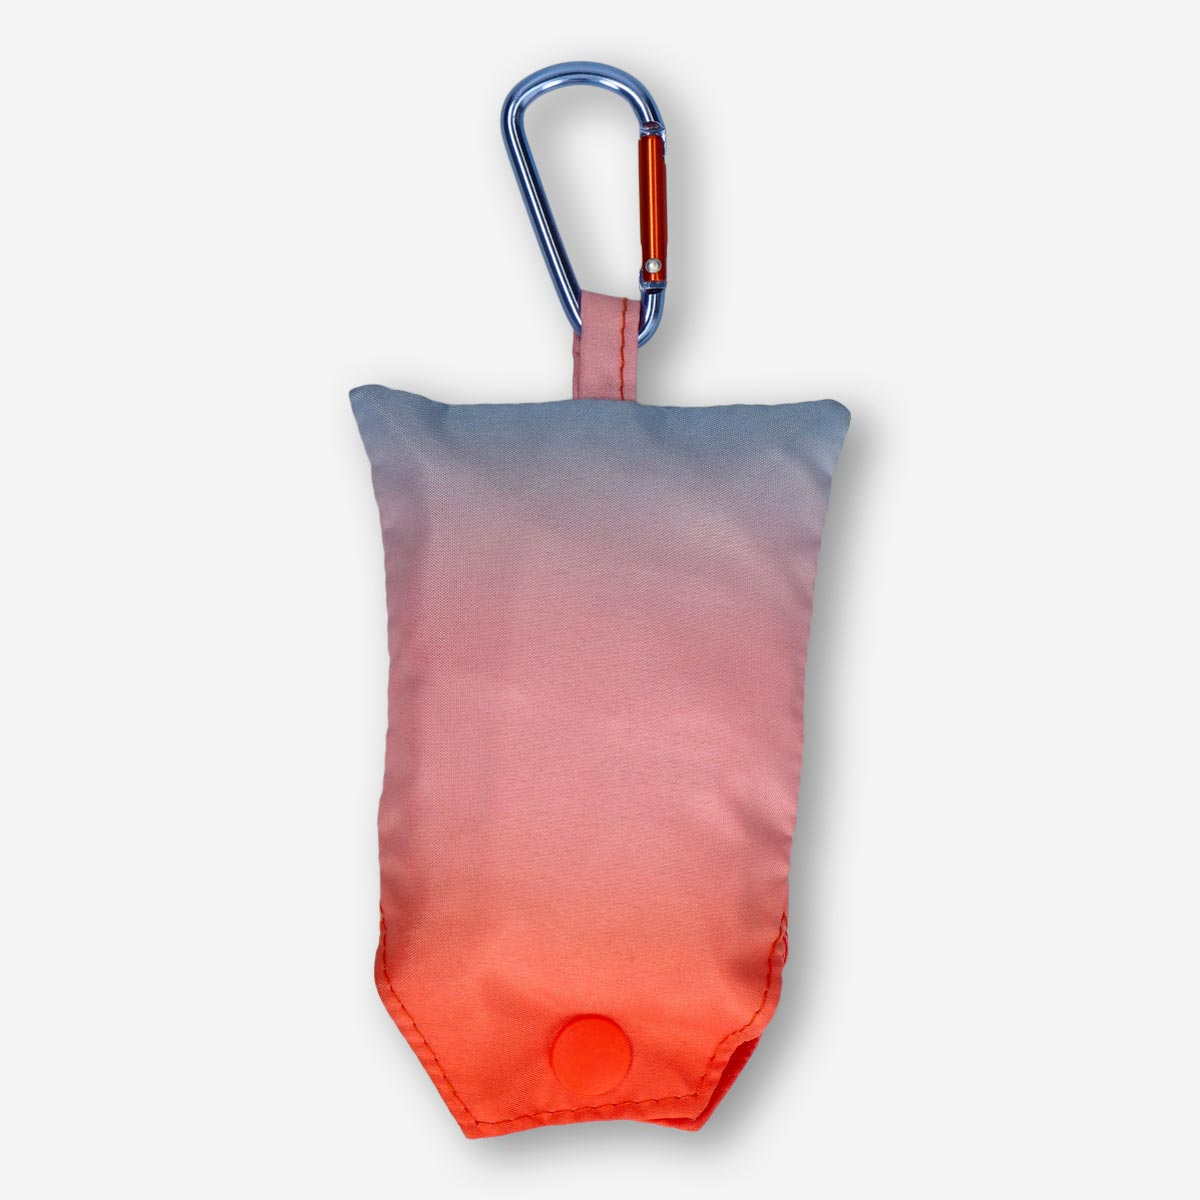 Foldable bag | Flying Tiger Copenhagen